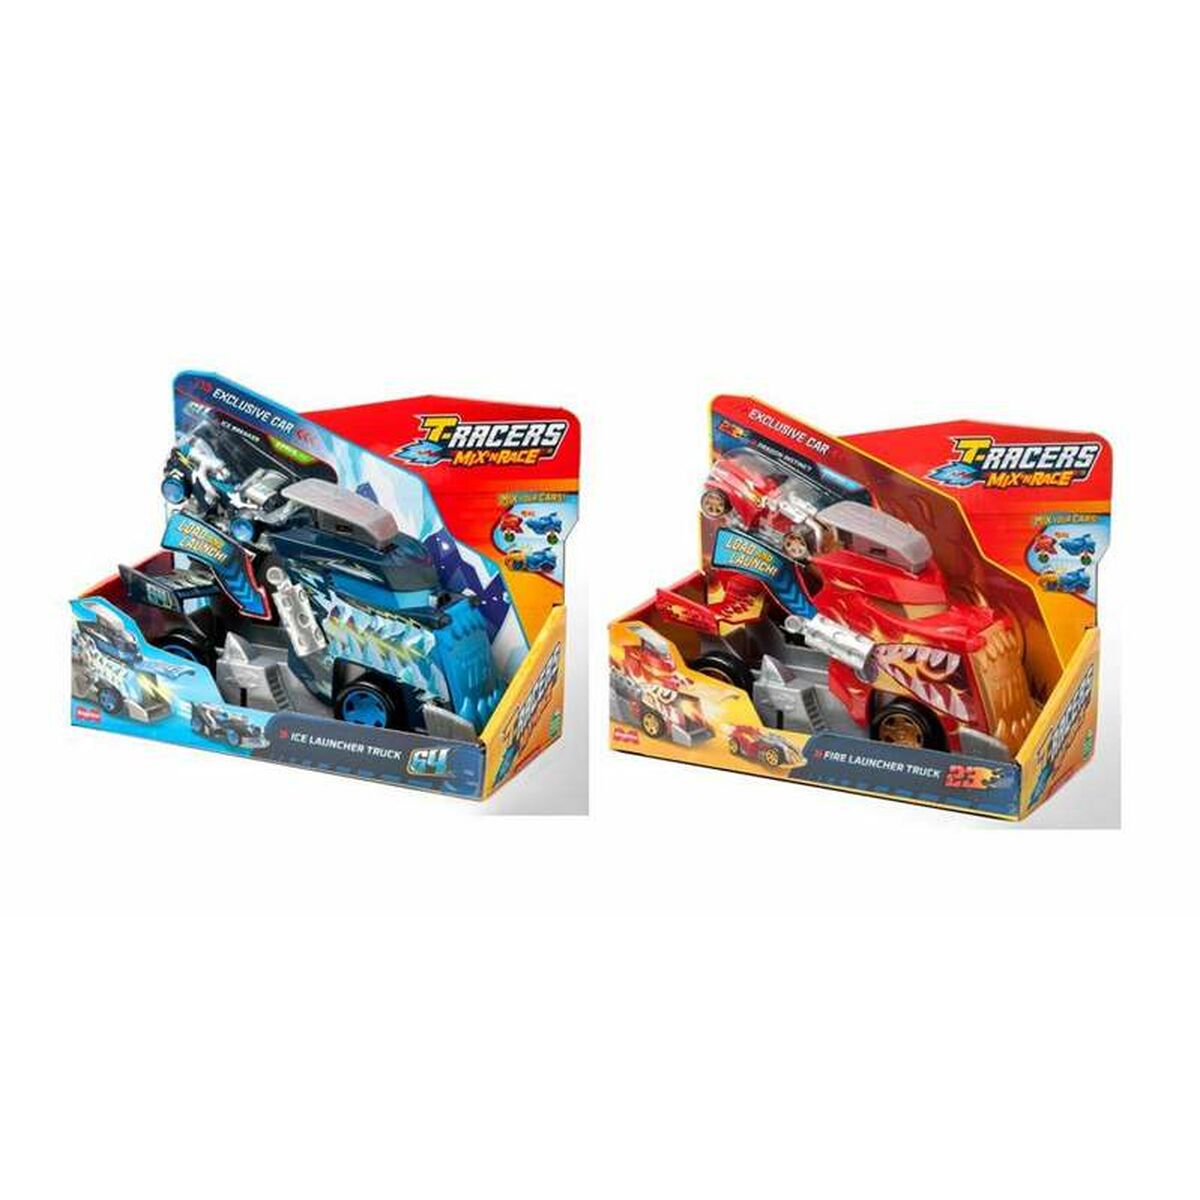 Kastare Magicbox Launcher Truck T-Racers Mix 'N Race 10 x 16,8 x 22,5 cm Bil-Leksaker och spel, Fordon-Magicbox Toys-peaceofhome.se